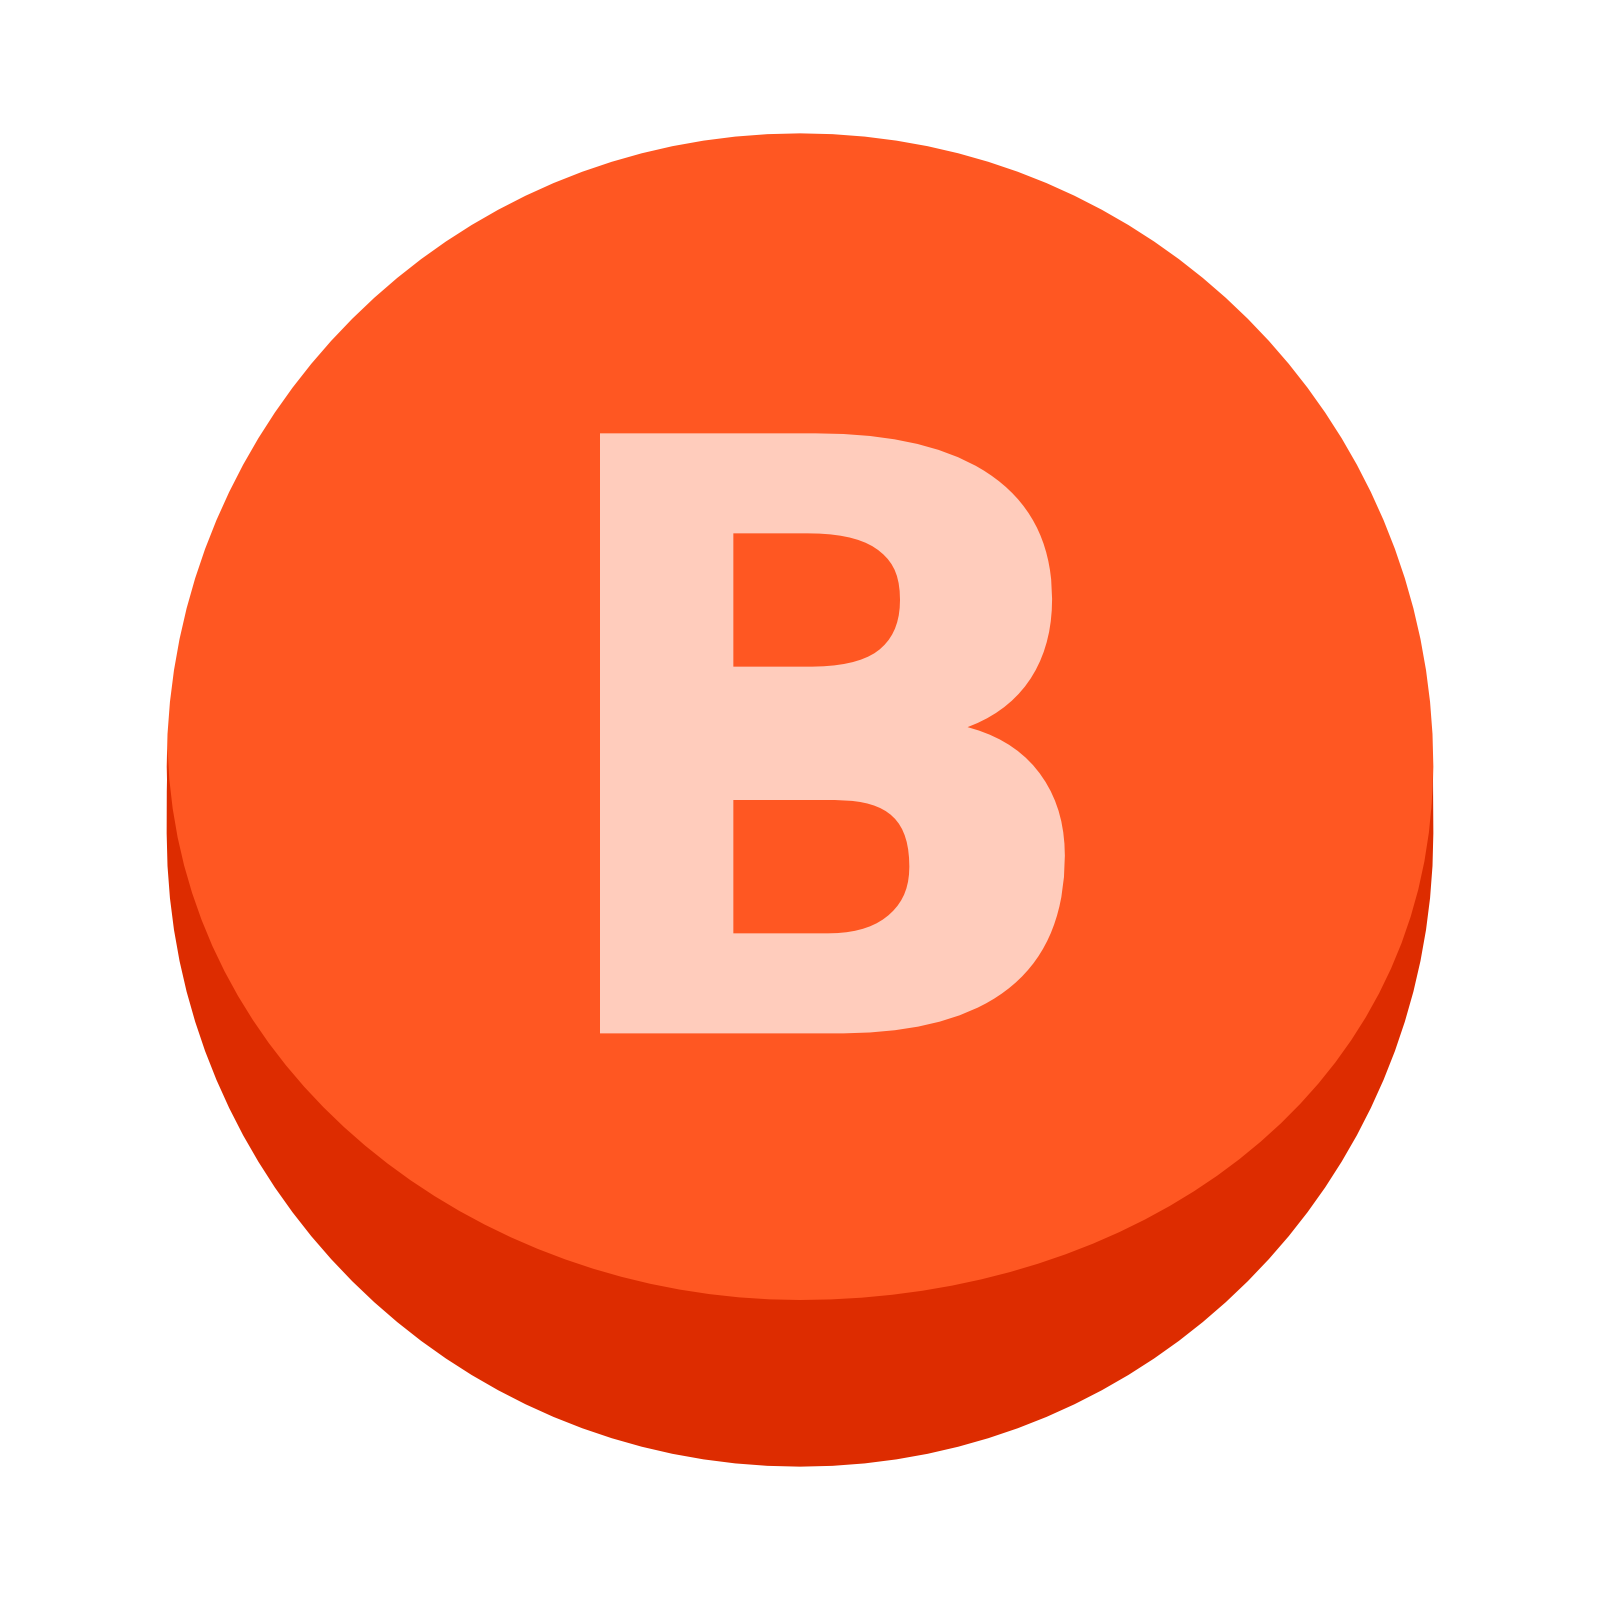 Фавикон б. Б.У. icon. Оранжевый знак. Решения logo.